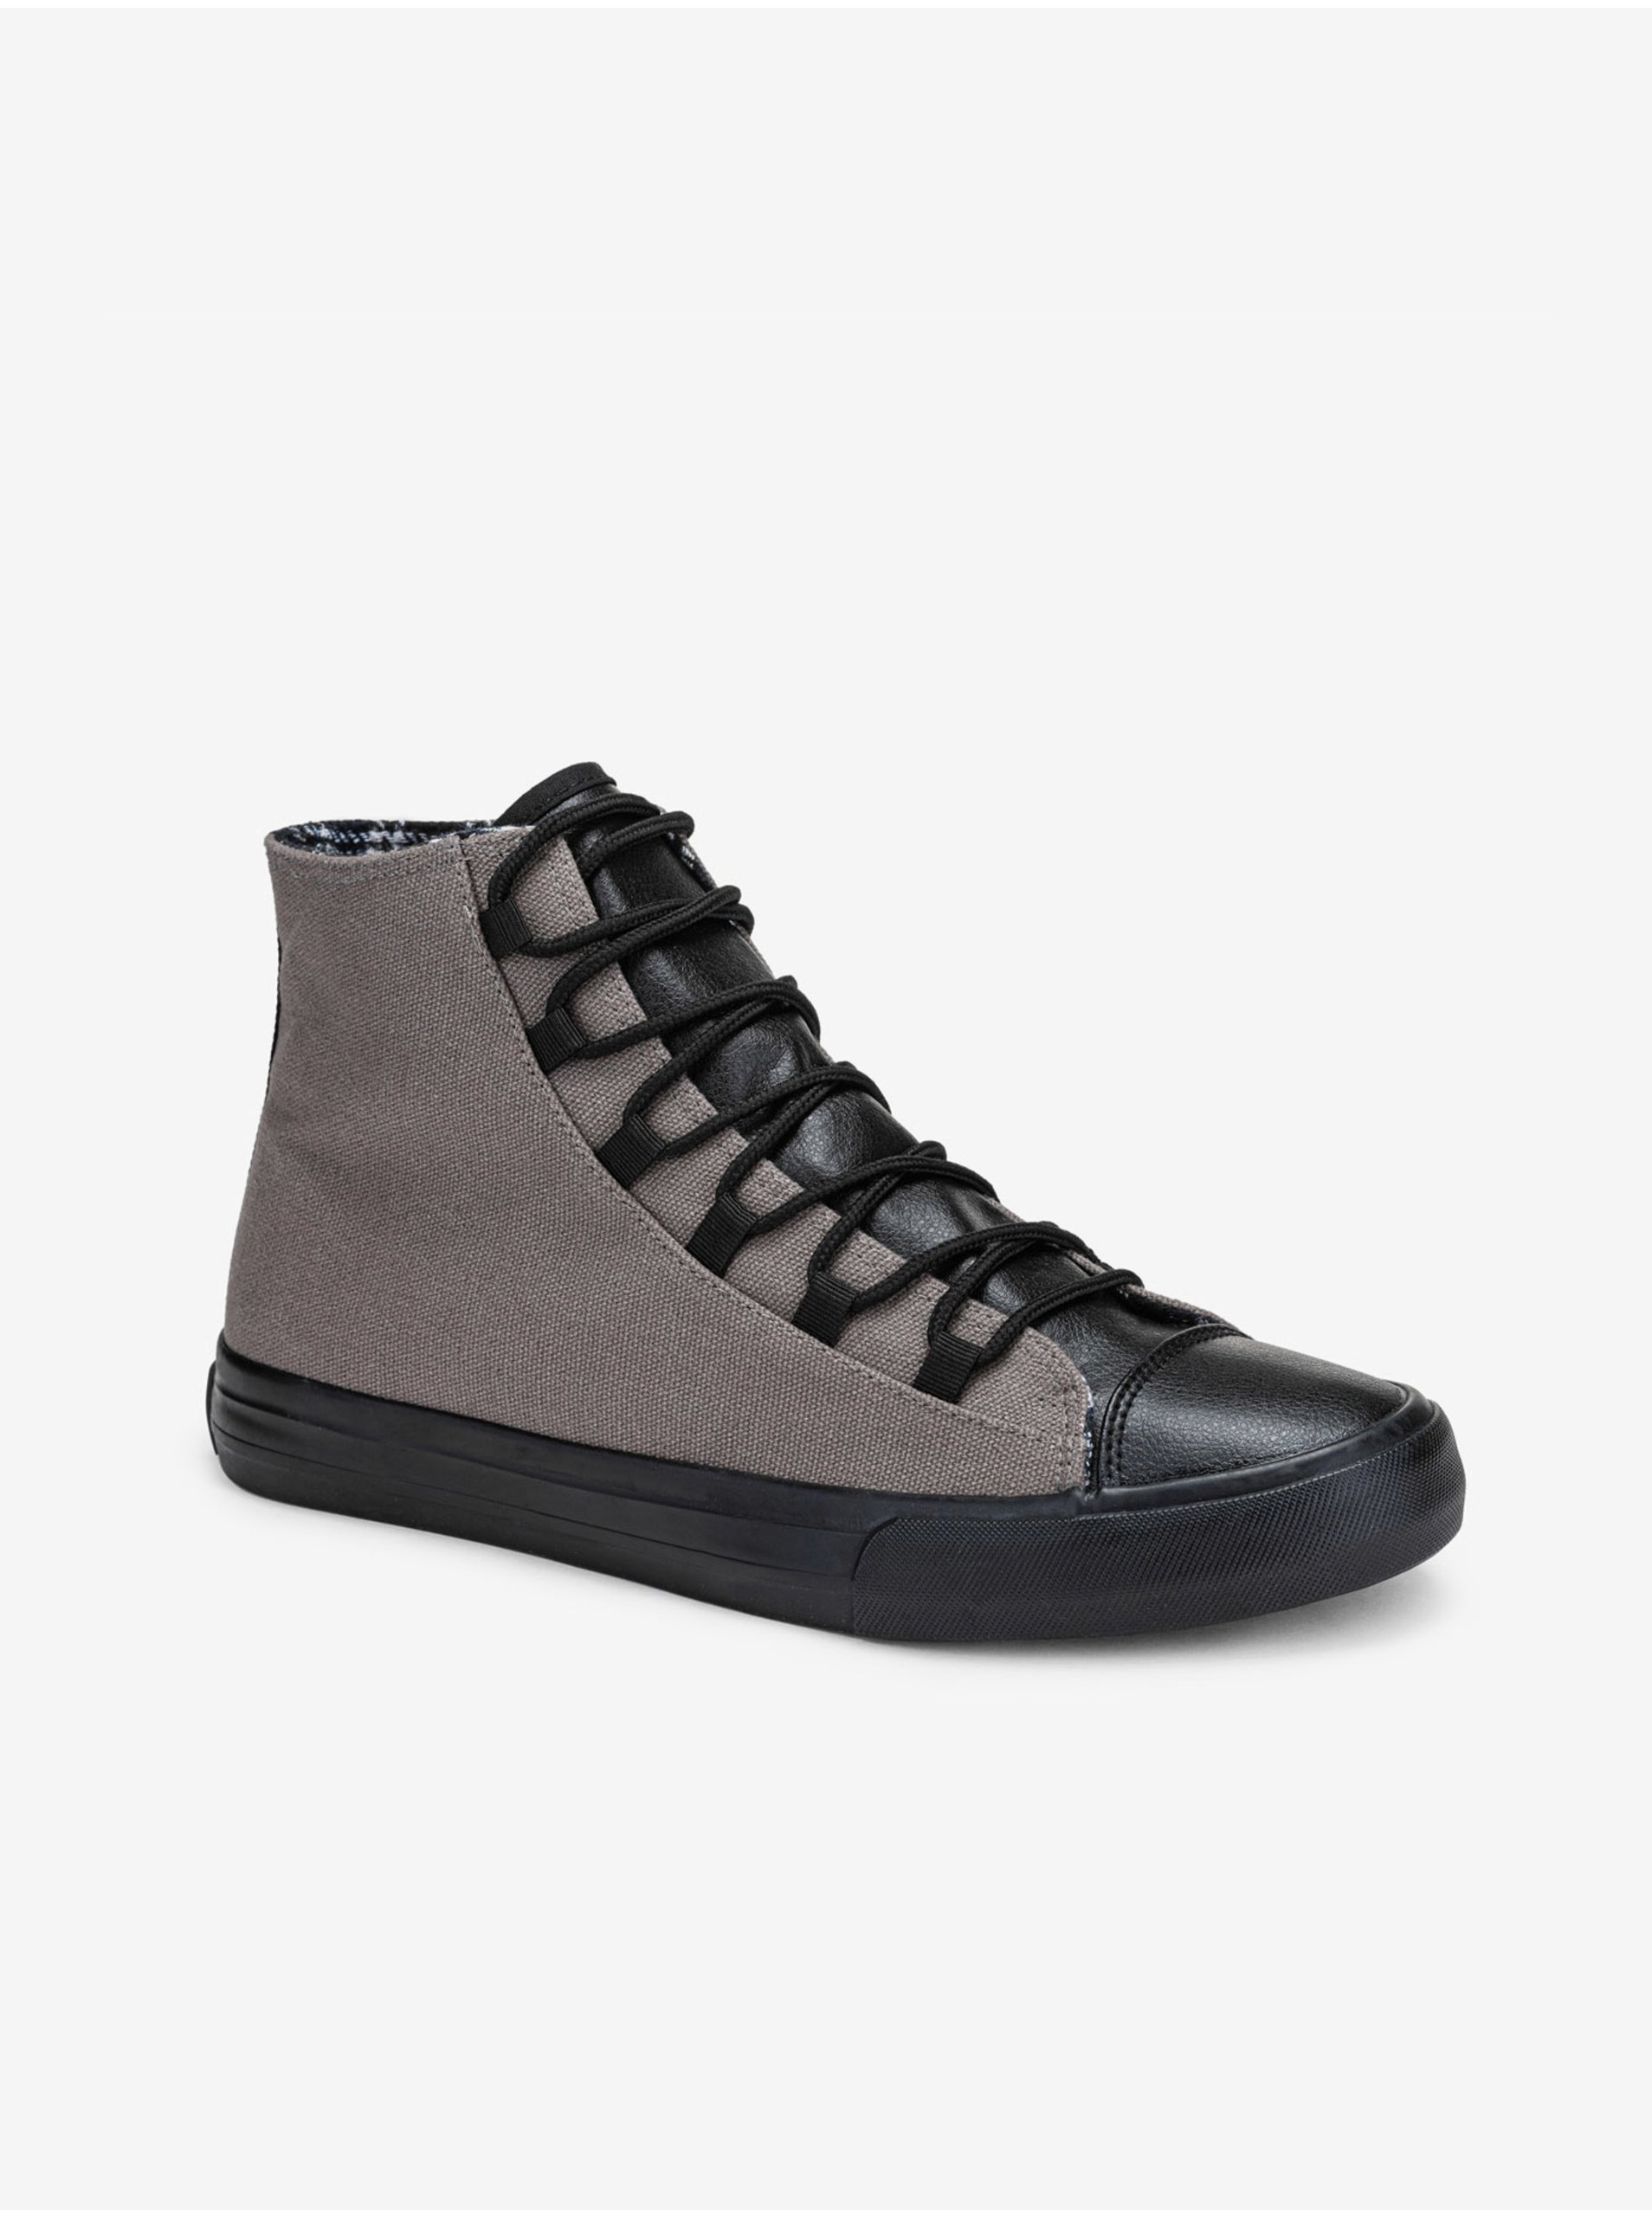 Lacno Čierno-šedé pánske sneakers topánky Ombre Clothing T378